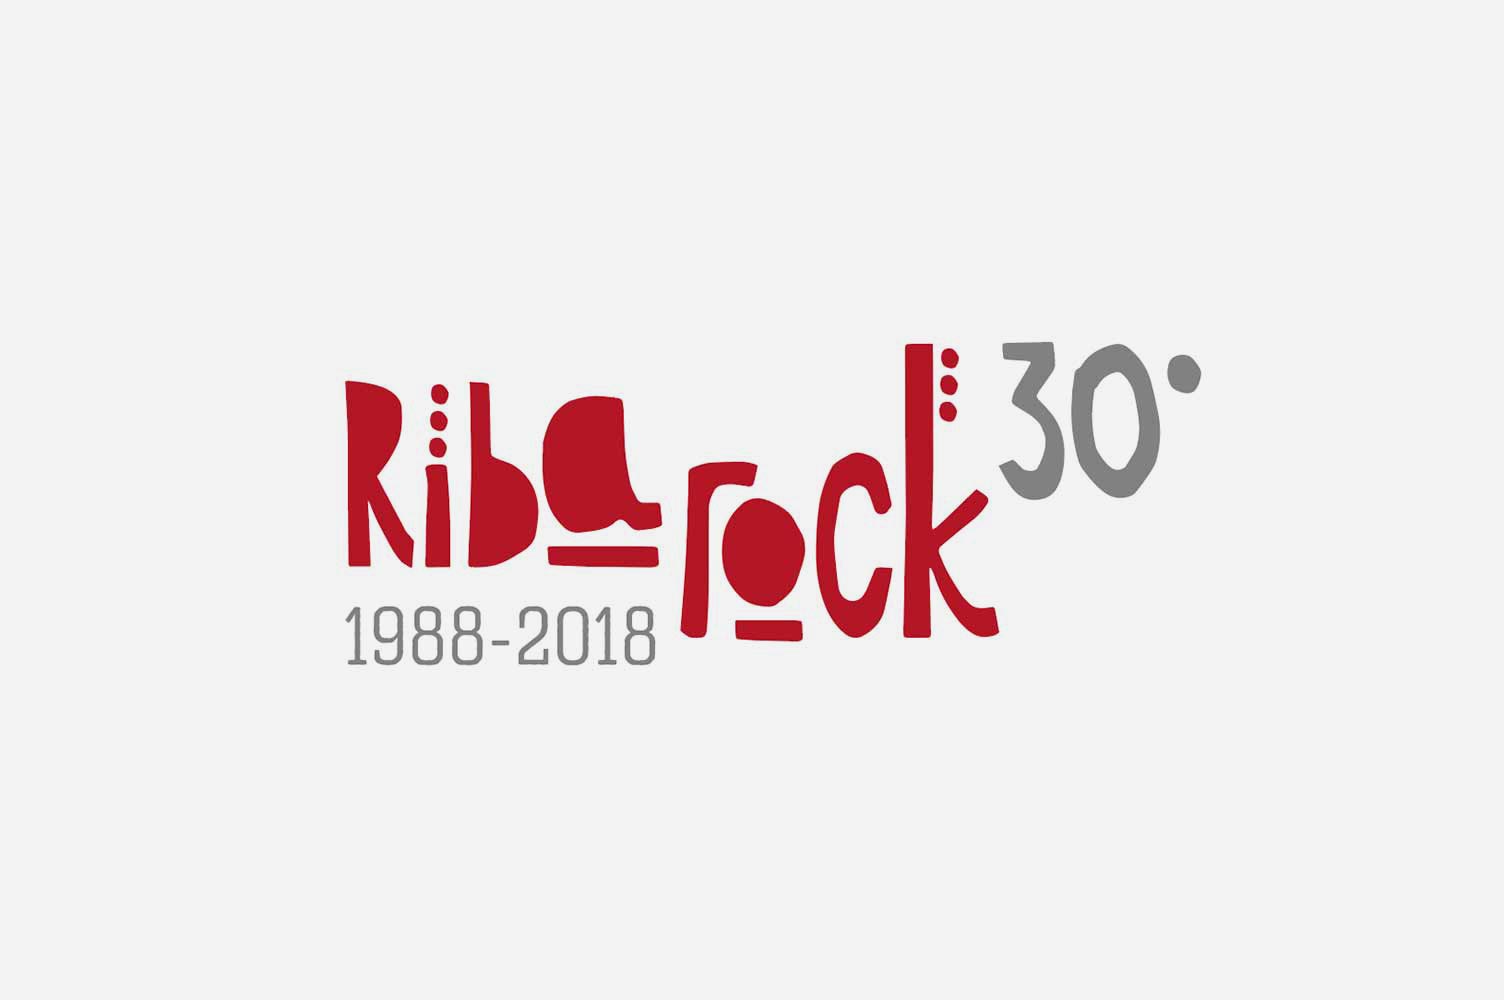 Logotipo 30 aniversario Riba-rock